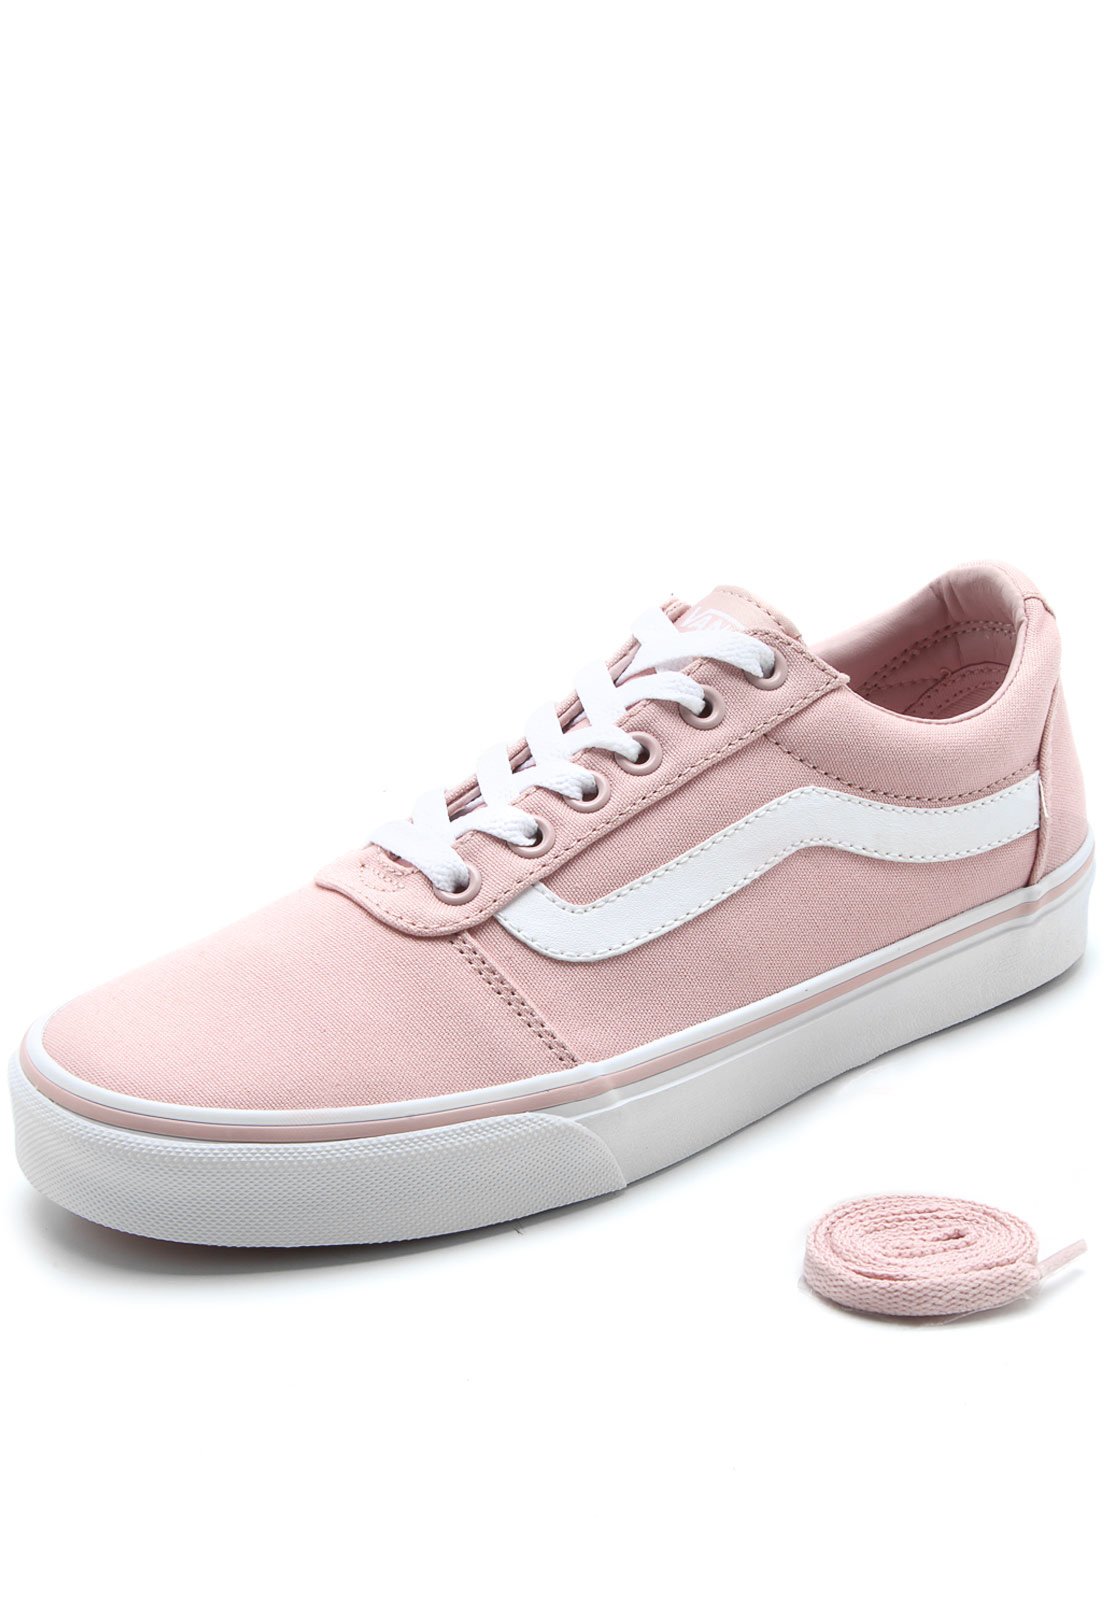 tenis rosa e branco vans